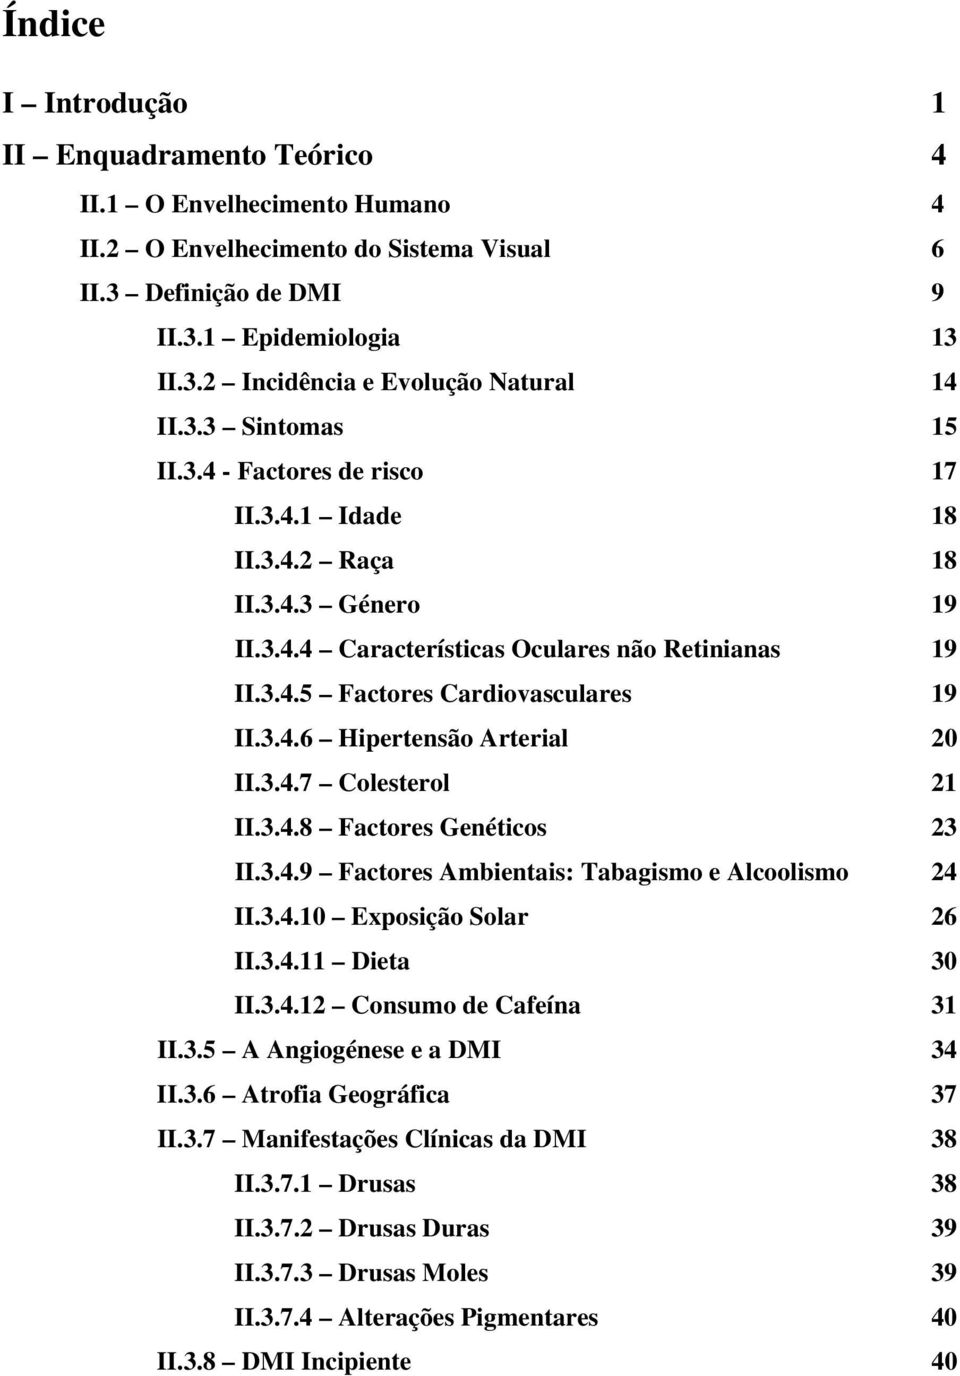 3.4.7 Colesterol 21 II.3.4.8 Factores Genéticos 23 II.3.4.9 Factores Ambientais: Tabagismo e Alcoolismo 24 II.3.4.10 Exposição Solar 26 II.3.4.11 Dieta 30 II.3.4.12 Consumo de Cafeína 31 II.3.5 A Angiogénese e a DMI 34 II.